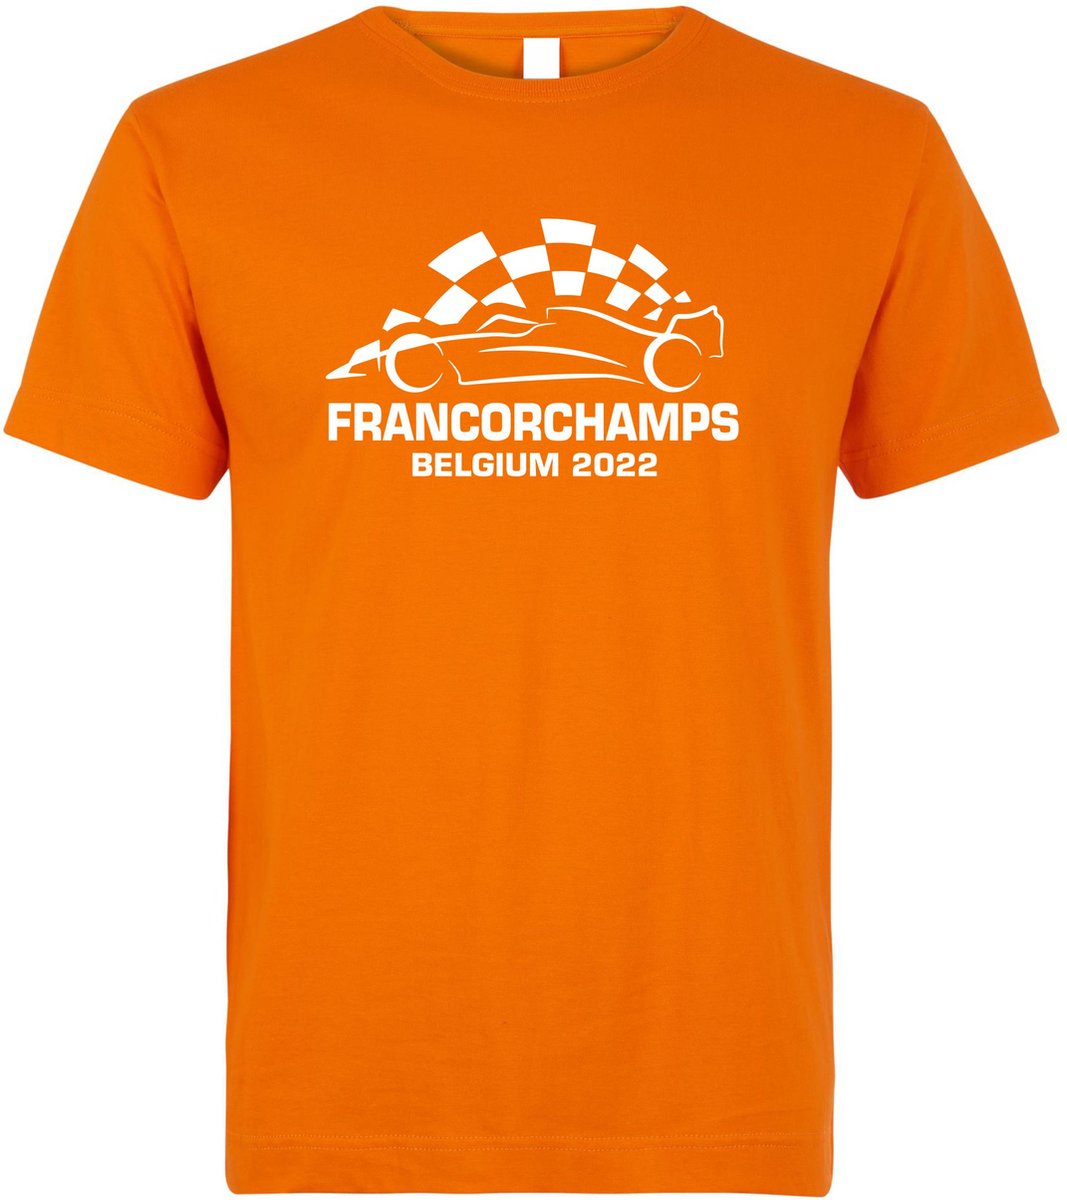 T-shirt kinderen Francorchamps Belgium 2022 met raceauto | Max Verstappen / Red Bull Racing / Formule 1 fan | Grand Prix Circuit Spa-Francorchamps | kleding shirt | Oranje | maat 104